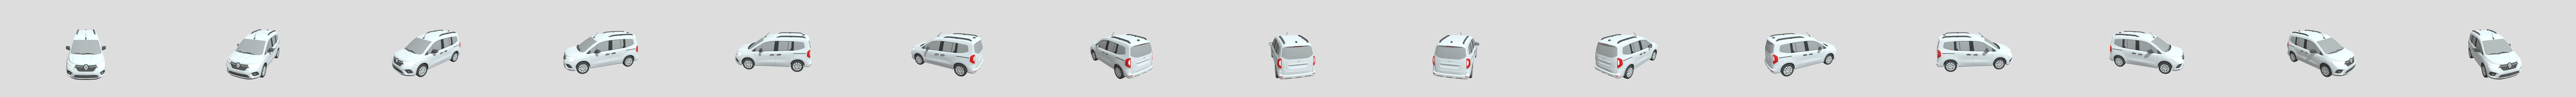 Renault Kangoo Tourneo 2023 3D model